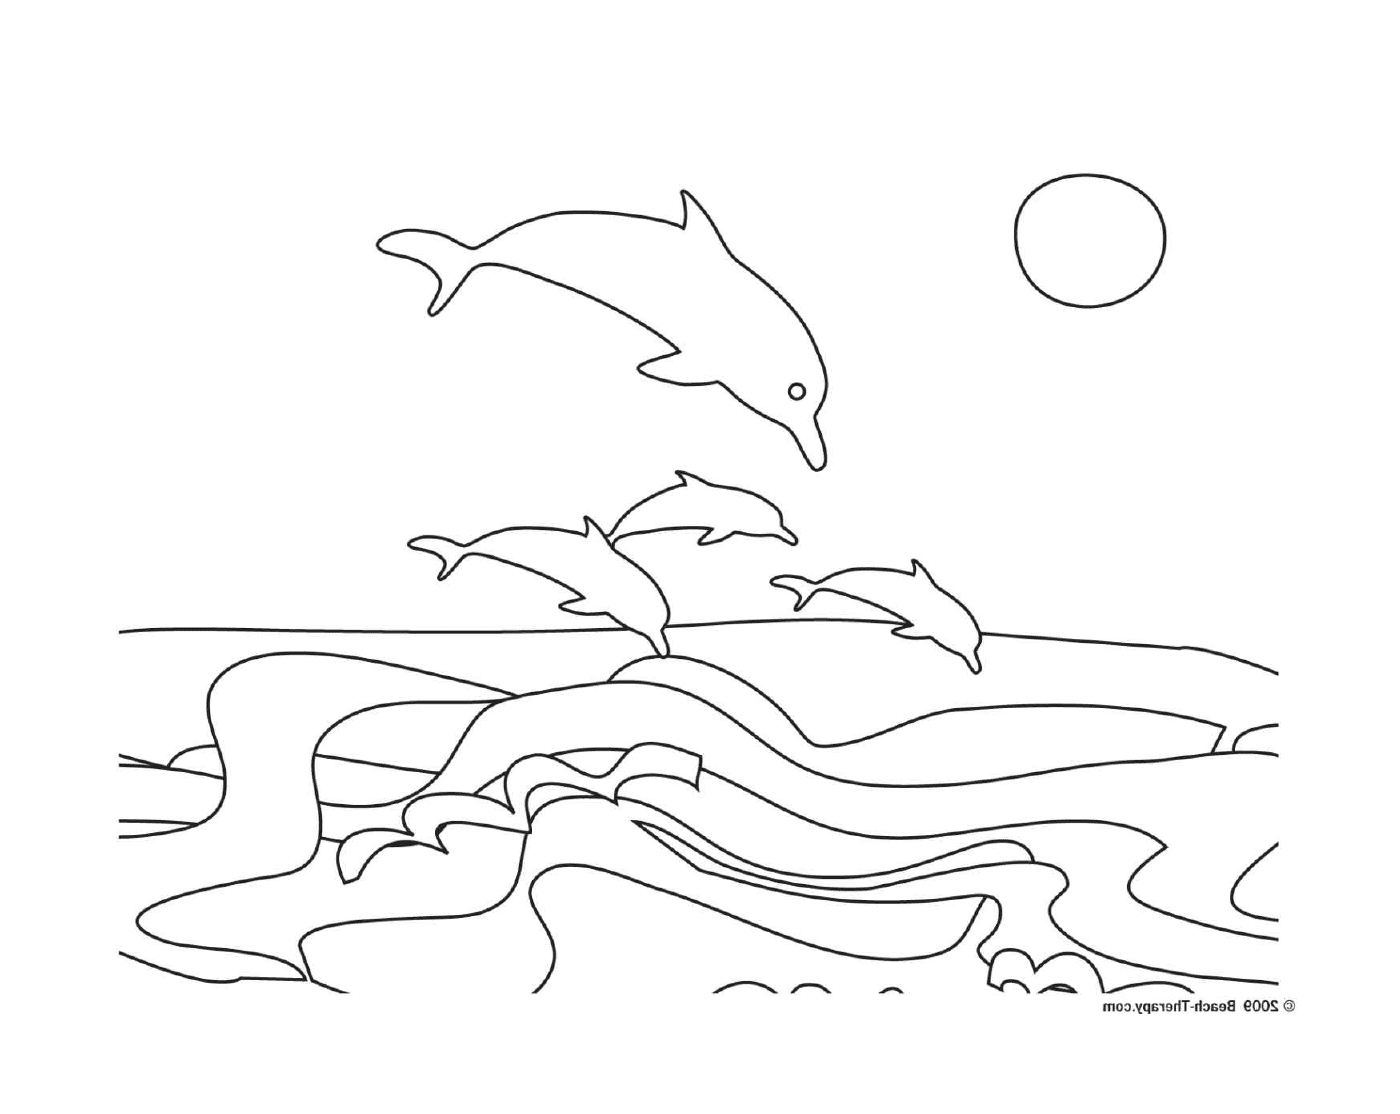  Grupo de delfines saltando del agua 